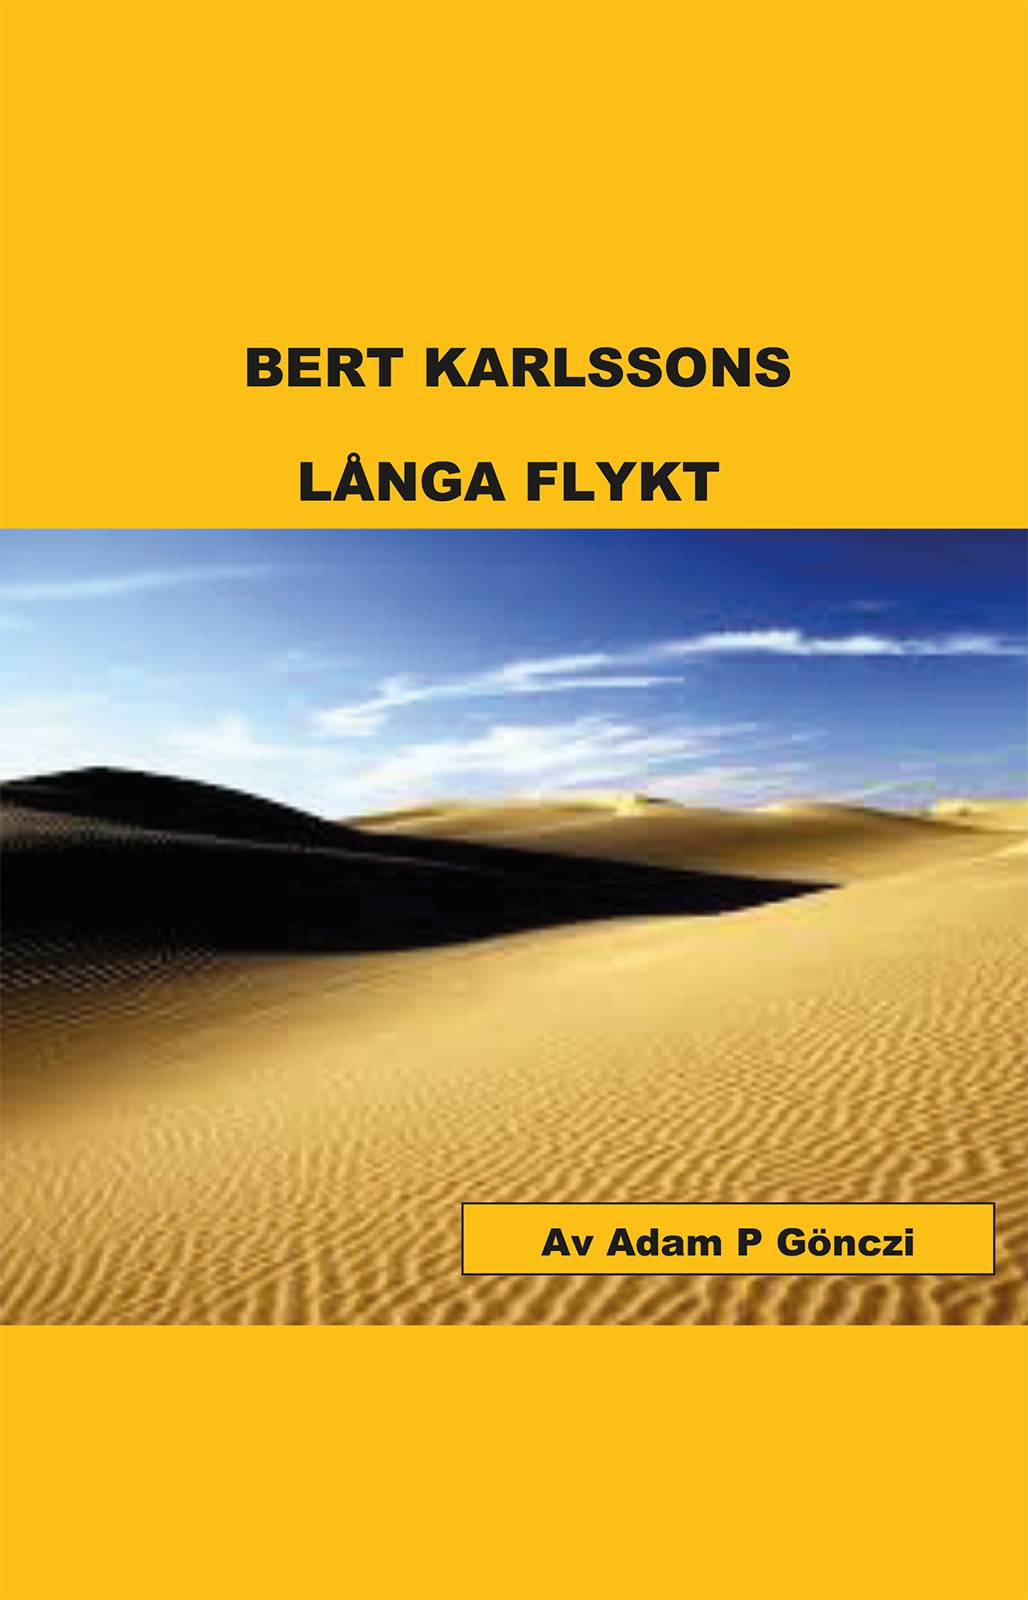 Bert Karlssons långa flykt